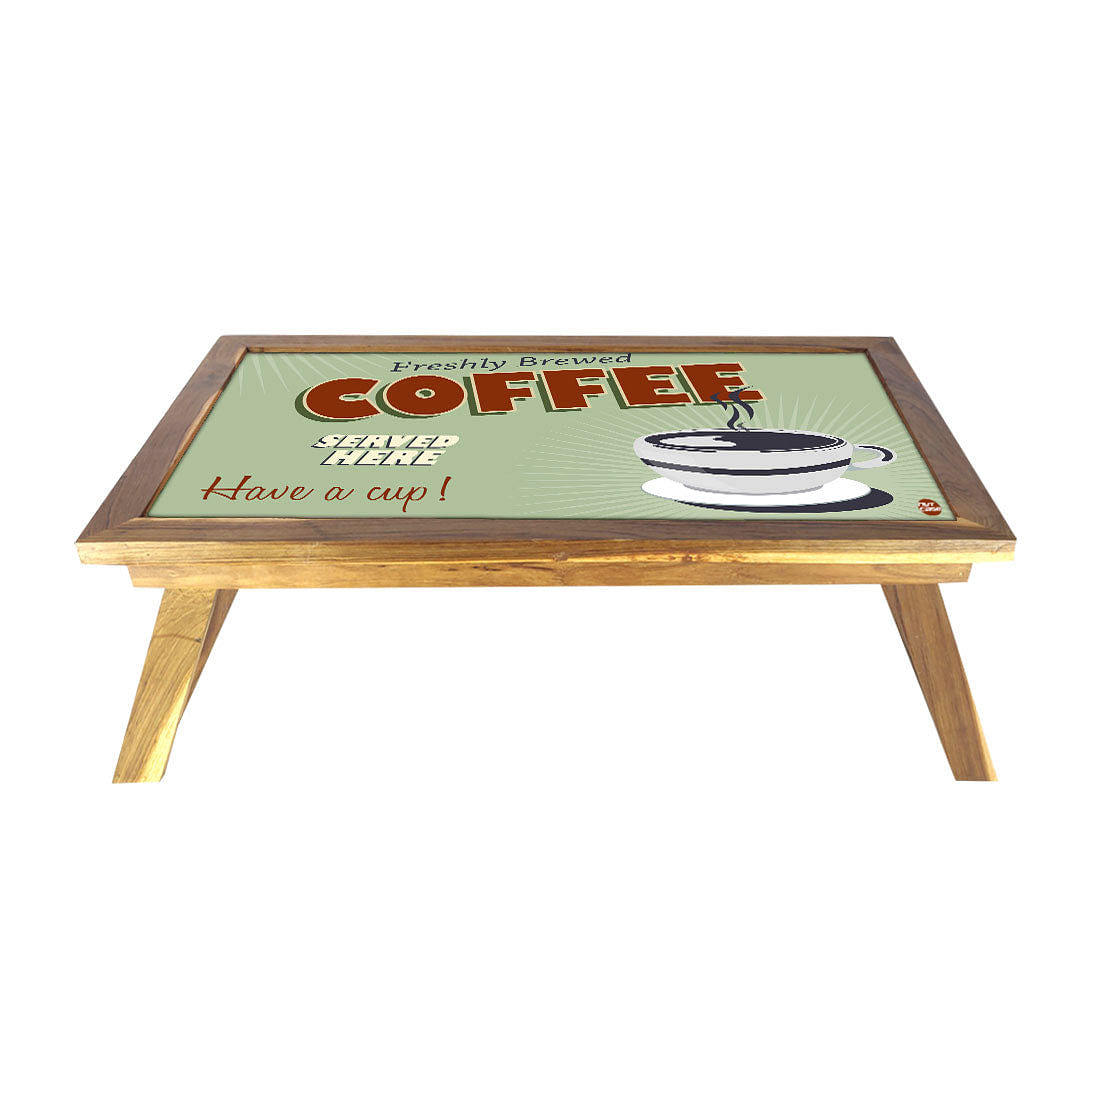 Wooden Folding Bed Table for Breakfast - Coffee Love Nutcase